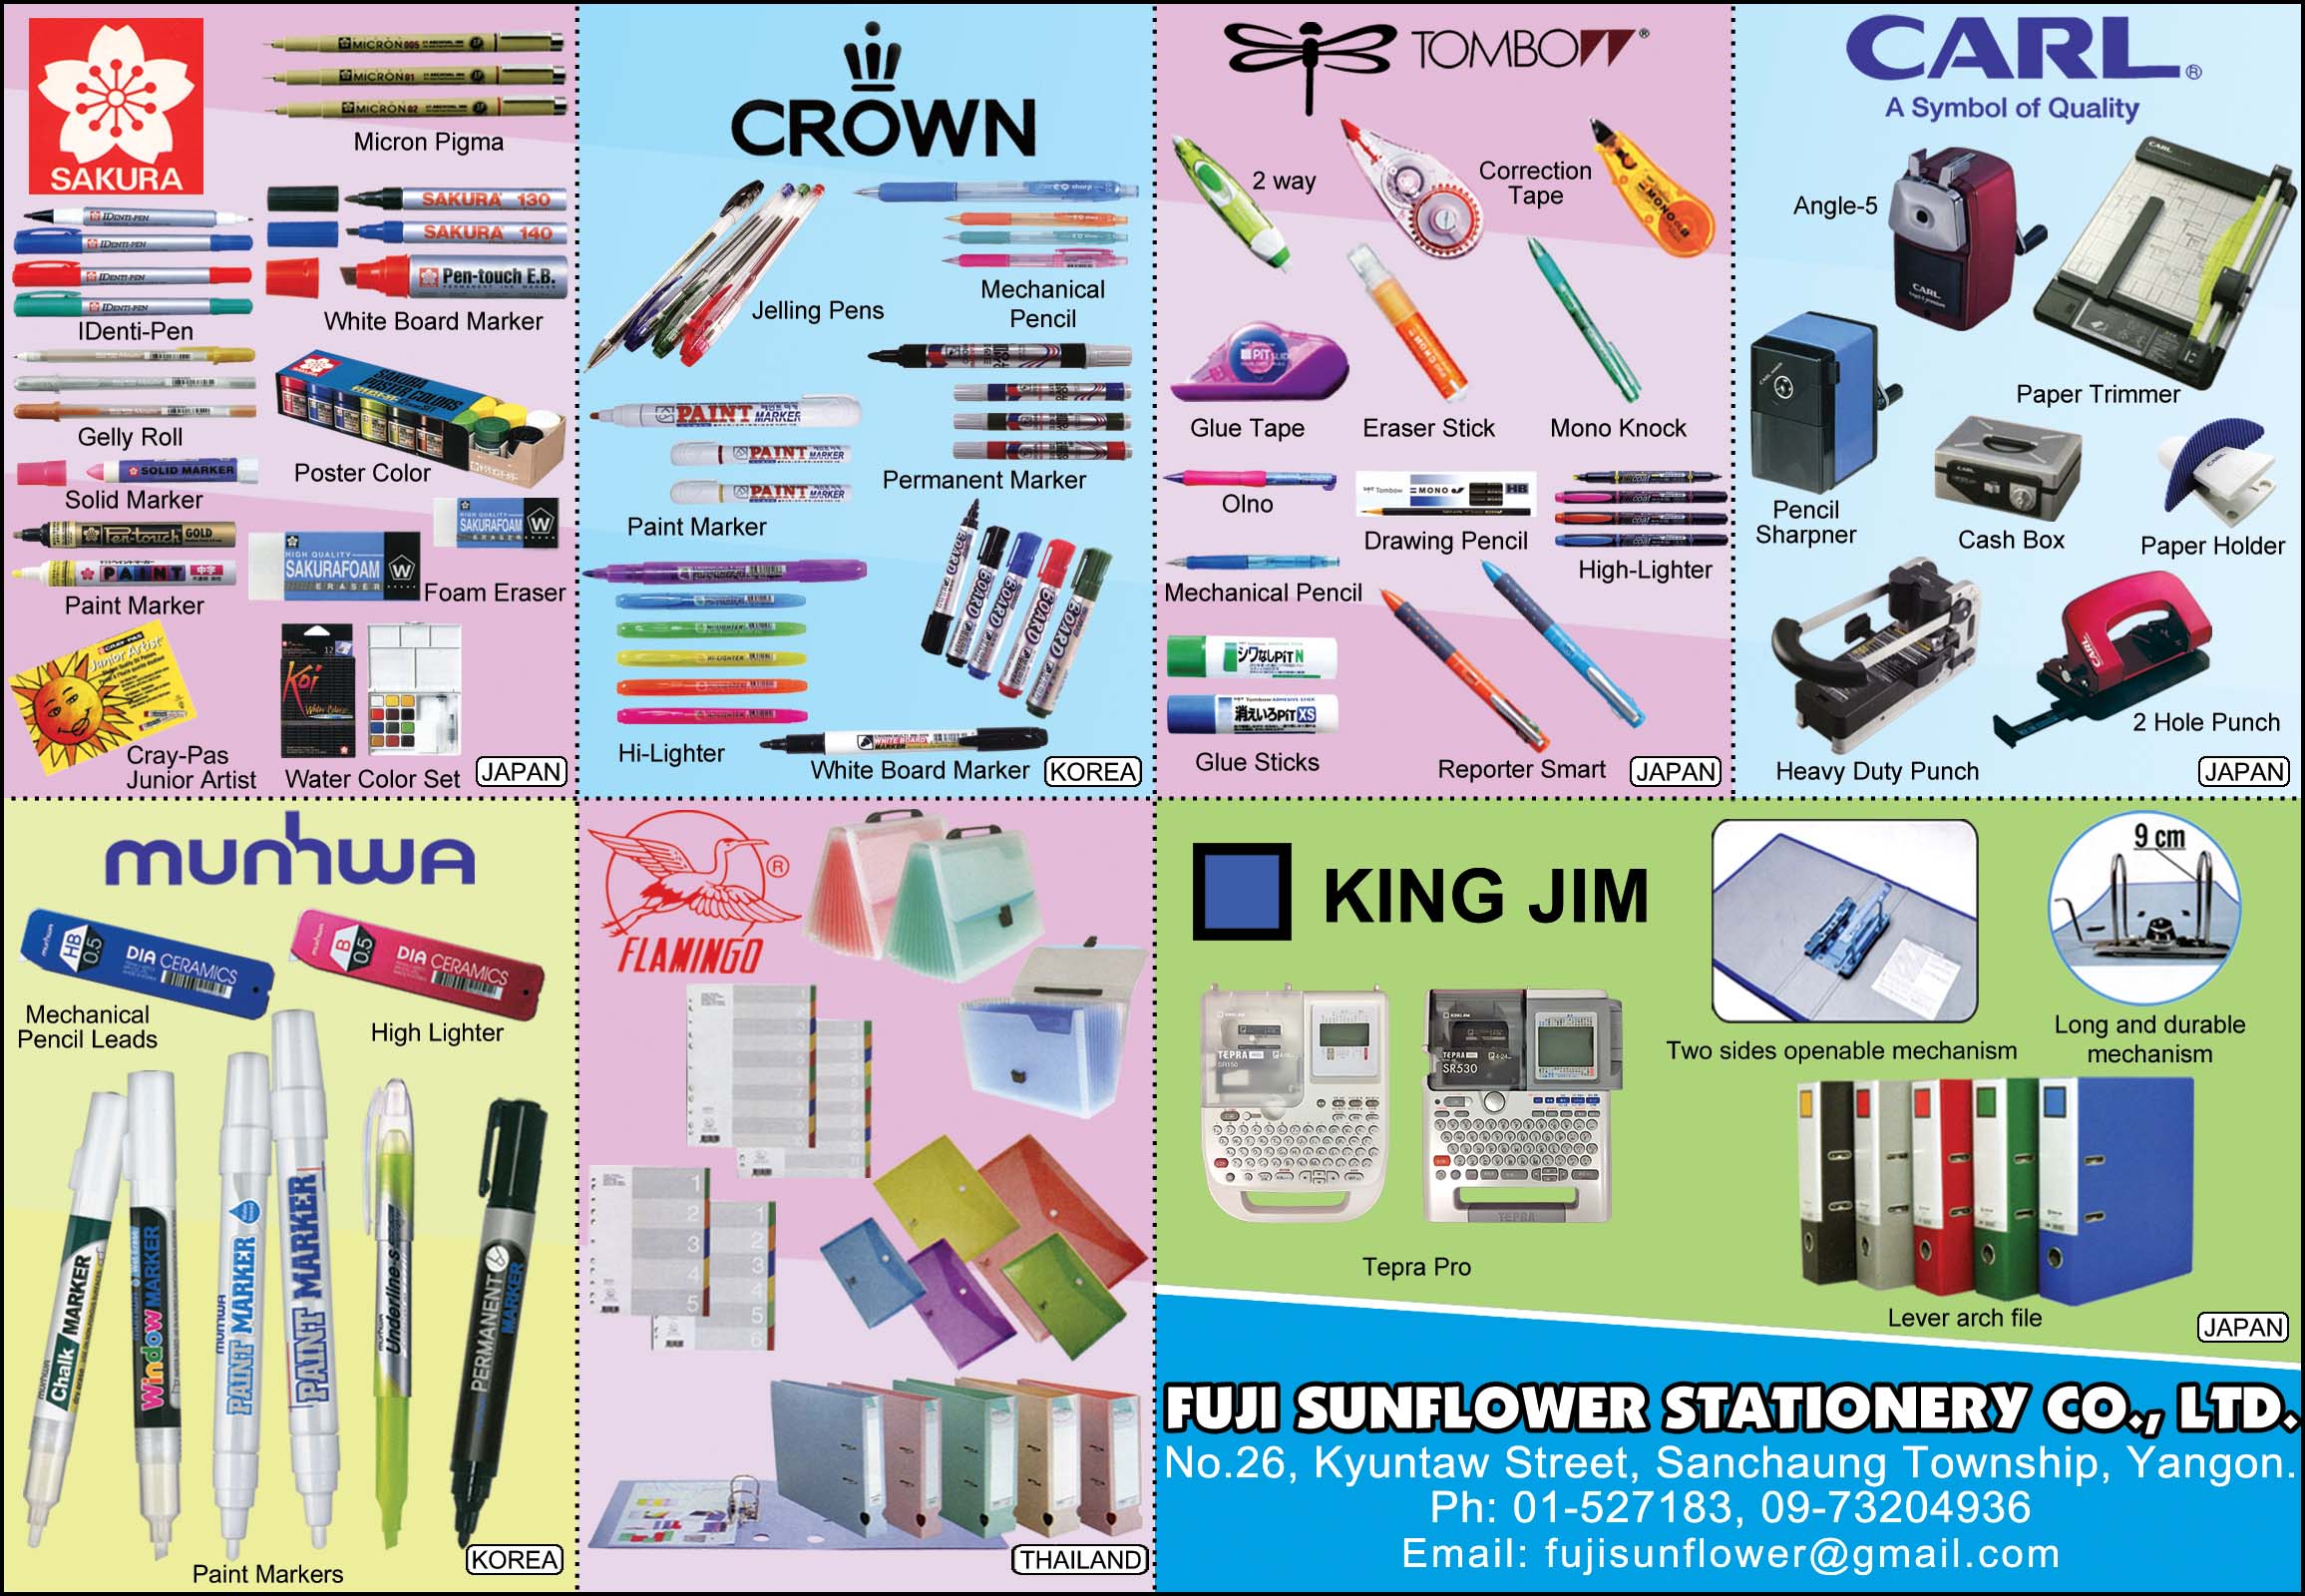 Fuji Sunflower Stationery Co., Ltd.